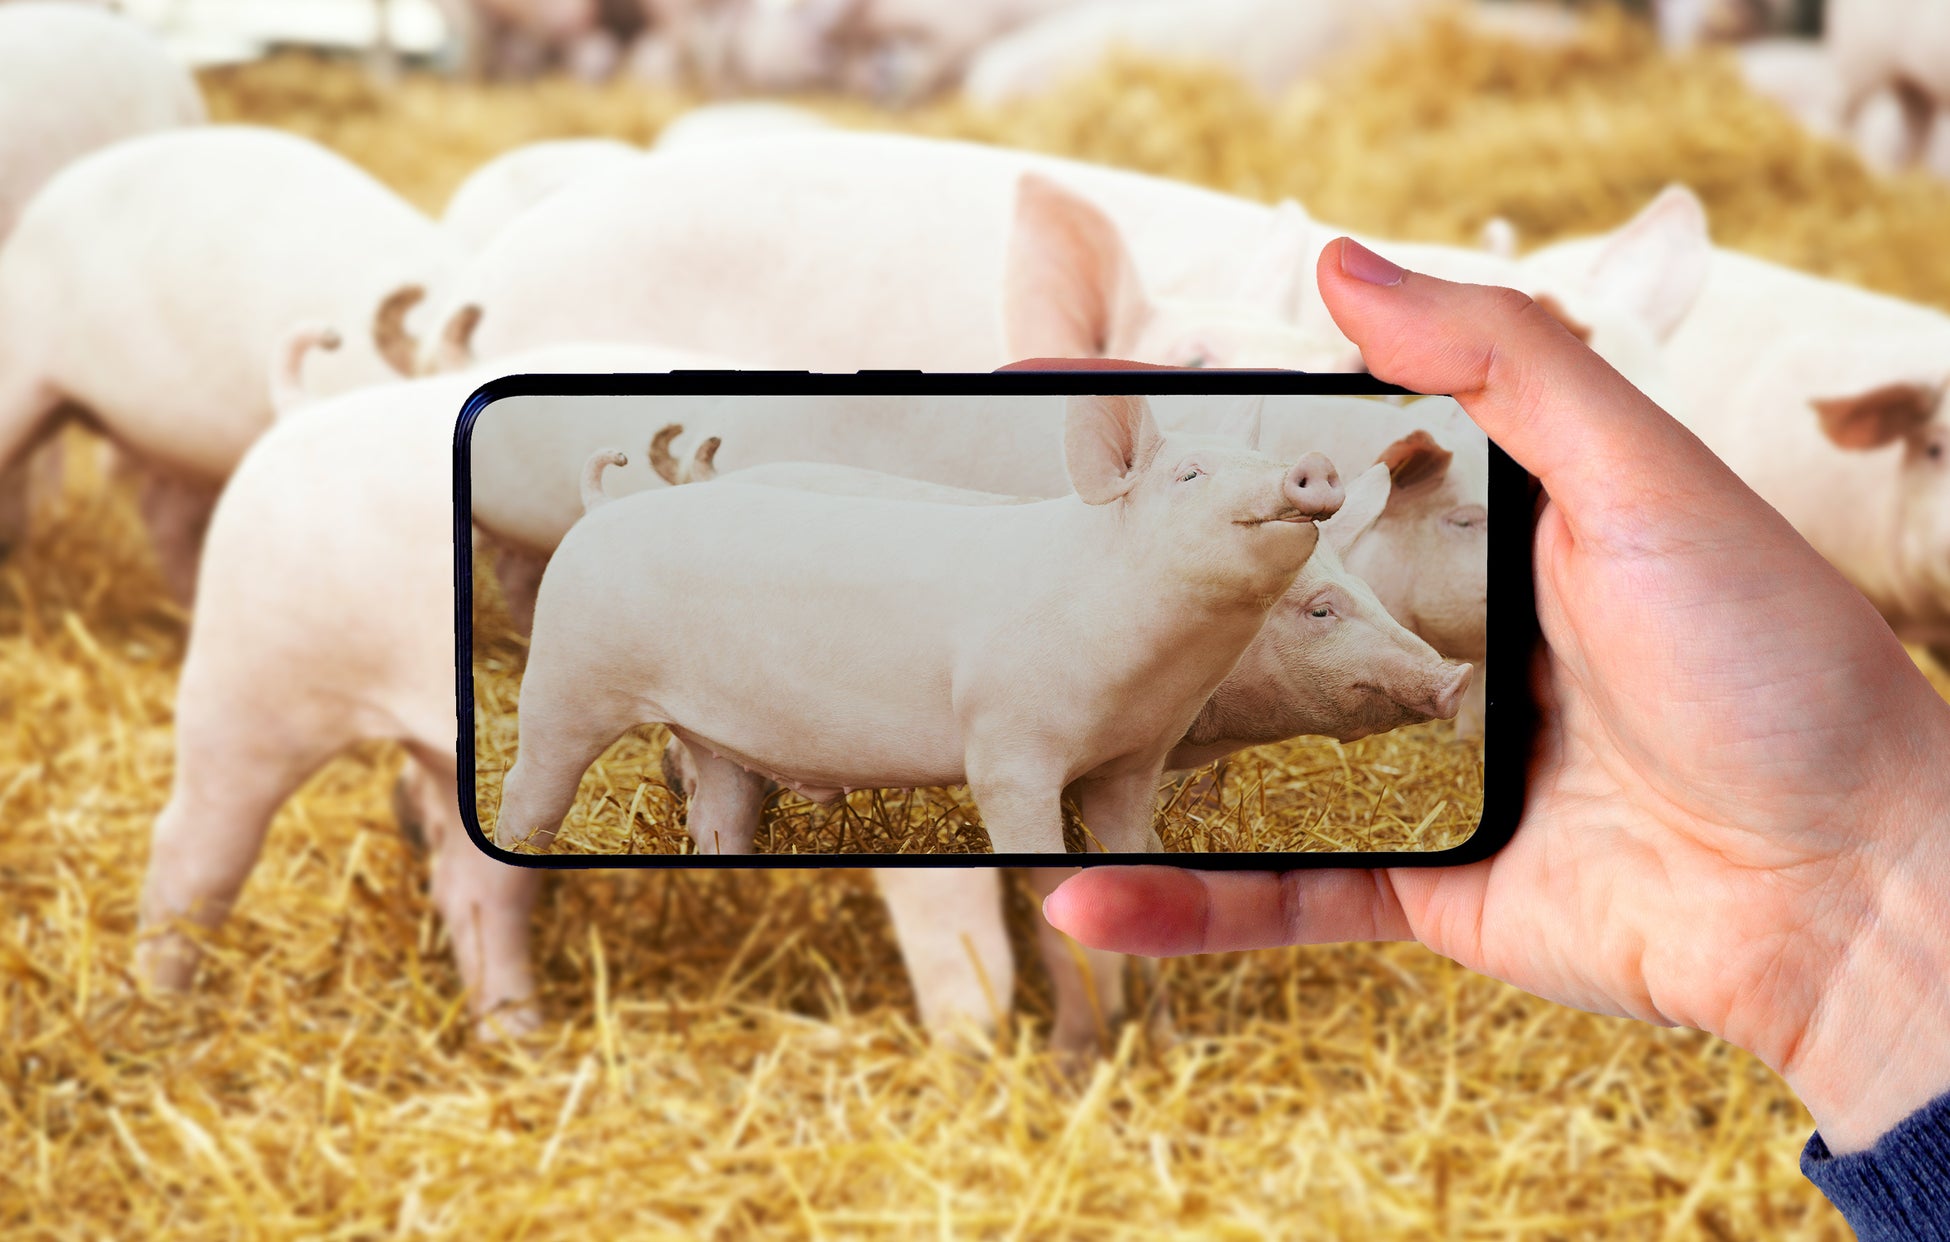 『PIGI』世界初 iPhone Proで豚の体重を測定 | 測定精度98%を実現のサブ画像1